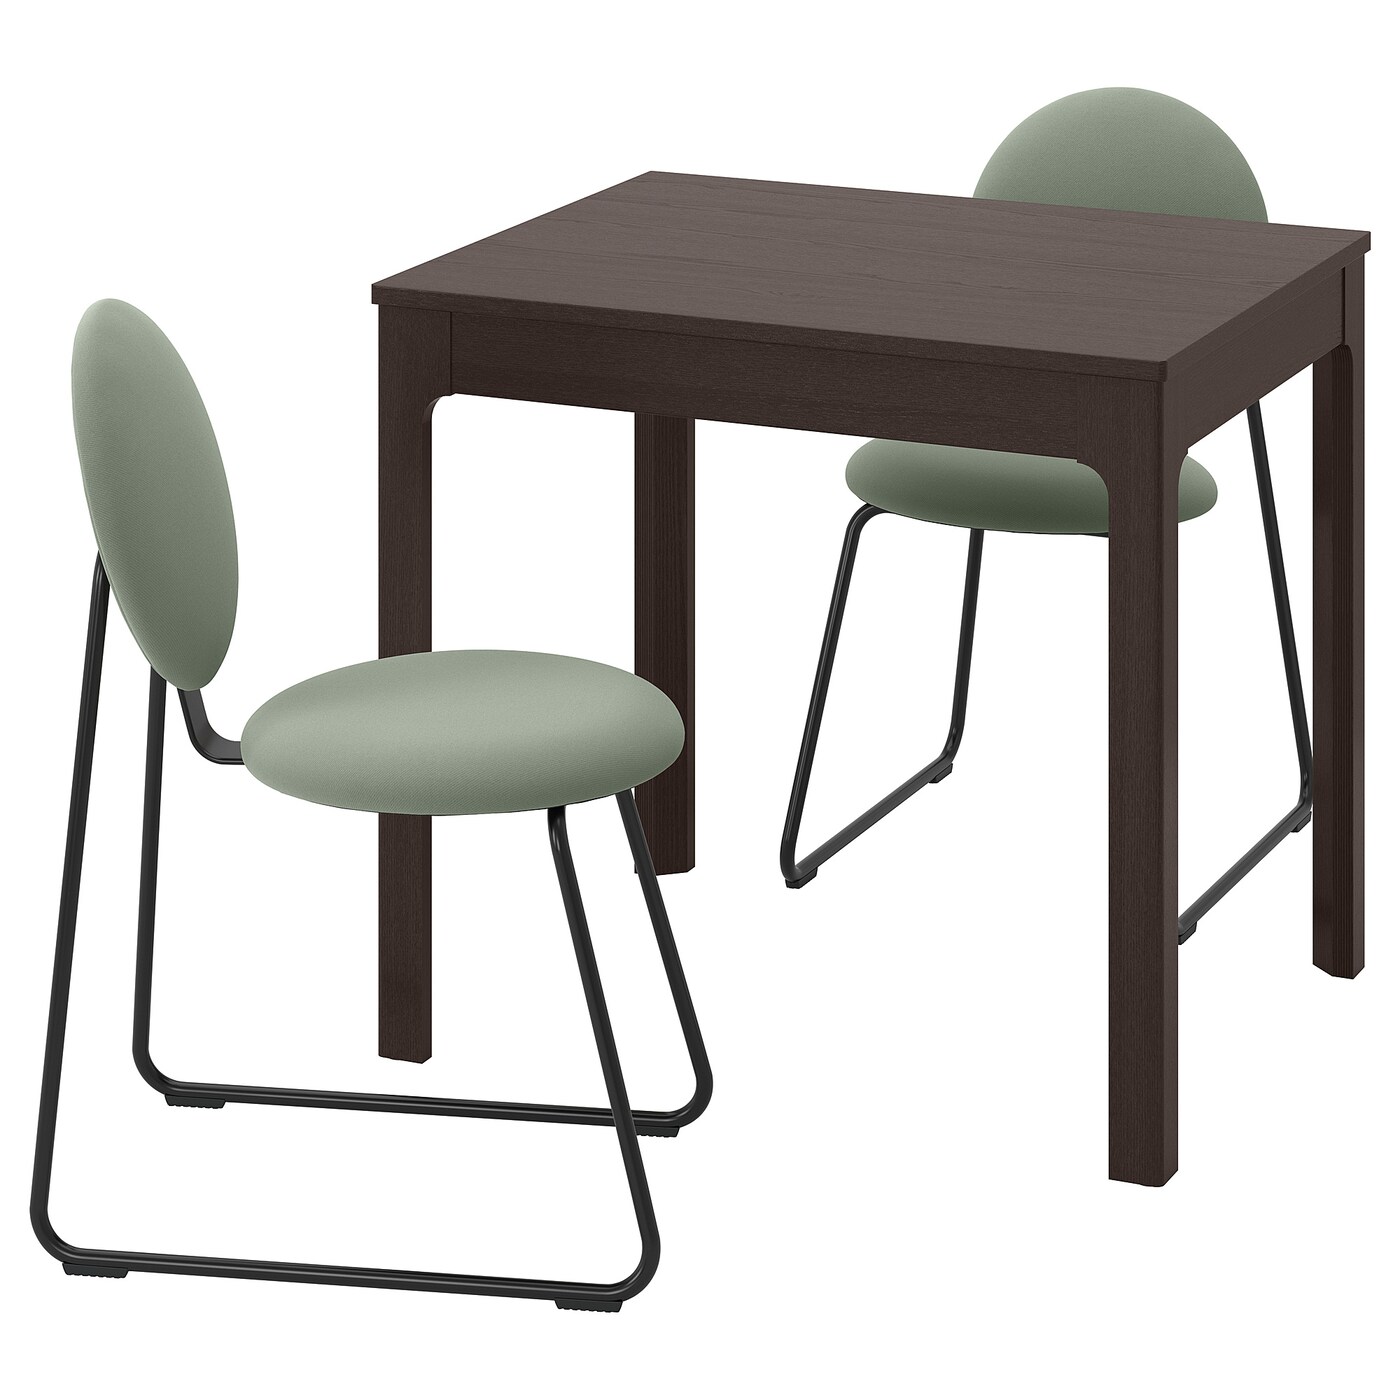 Стол и 2 стула - EKEDALEN / MÅNHULT IKEA/ЭКЕДАЛЕН/МОНХУЛЬТ ИКЕА,120х75х70 см, коричневый/зеленый